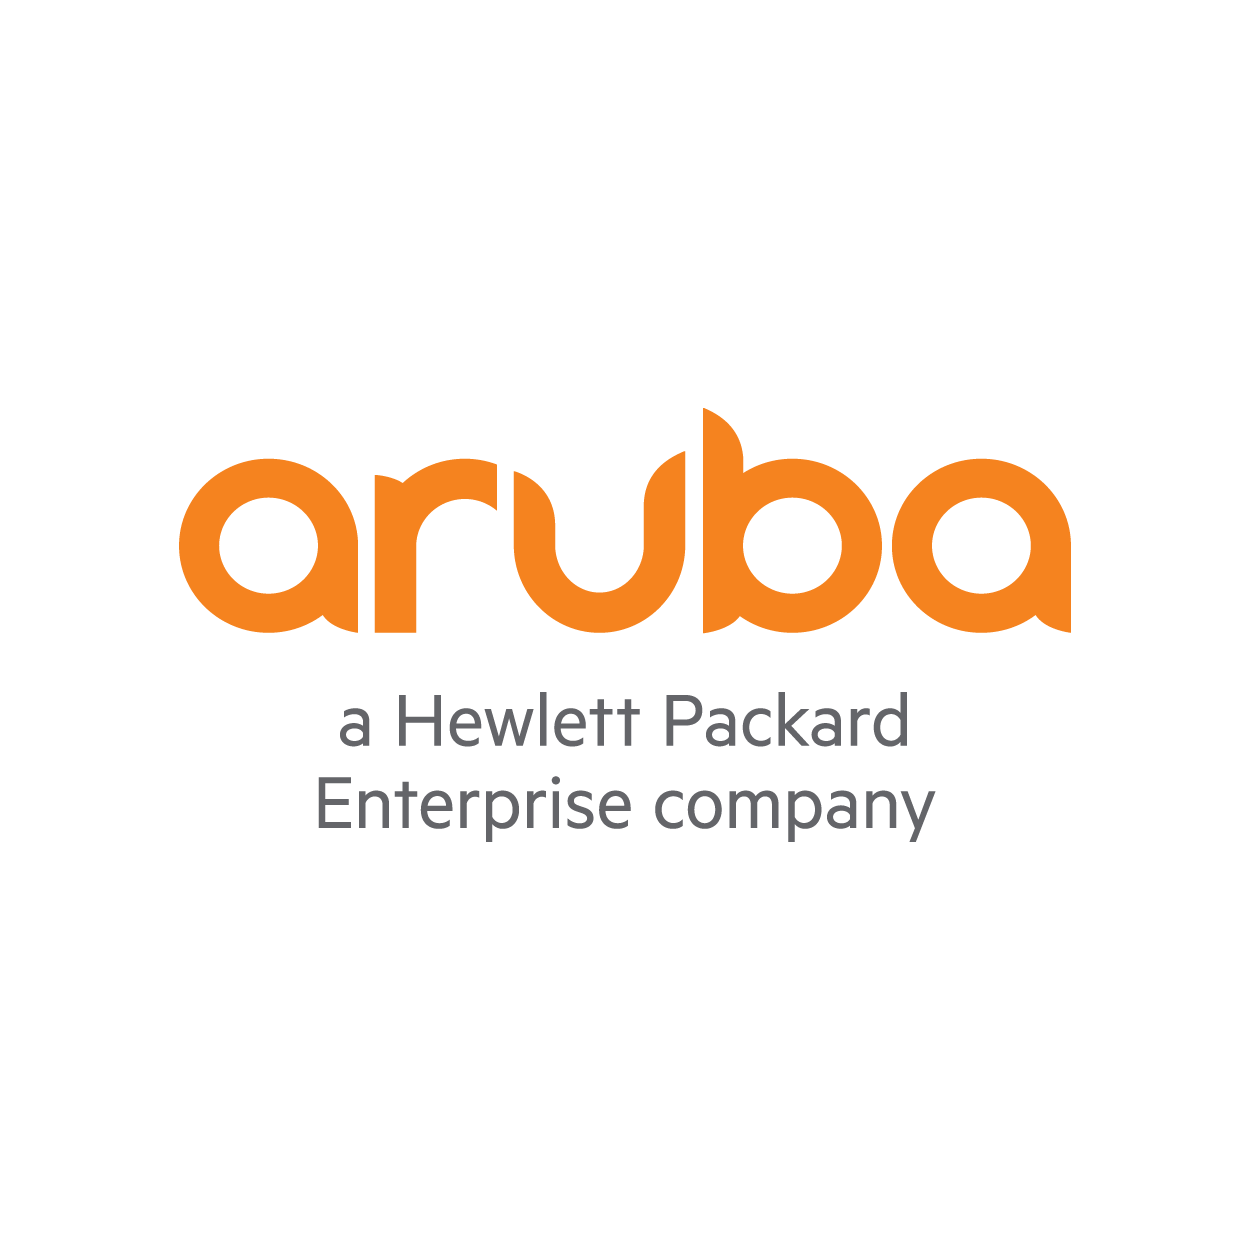 Aruba: A Hewlett Packard Enterprise Company